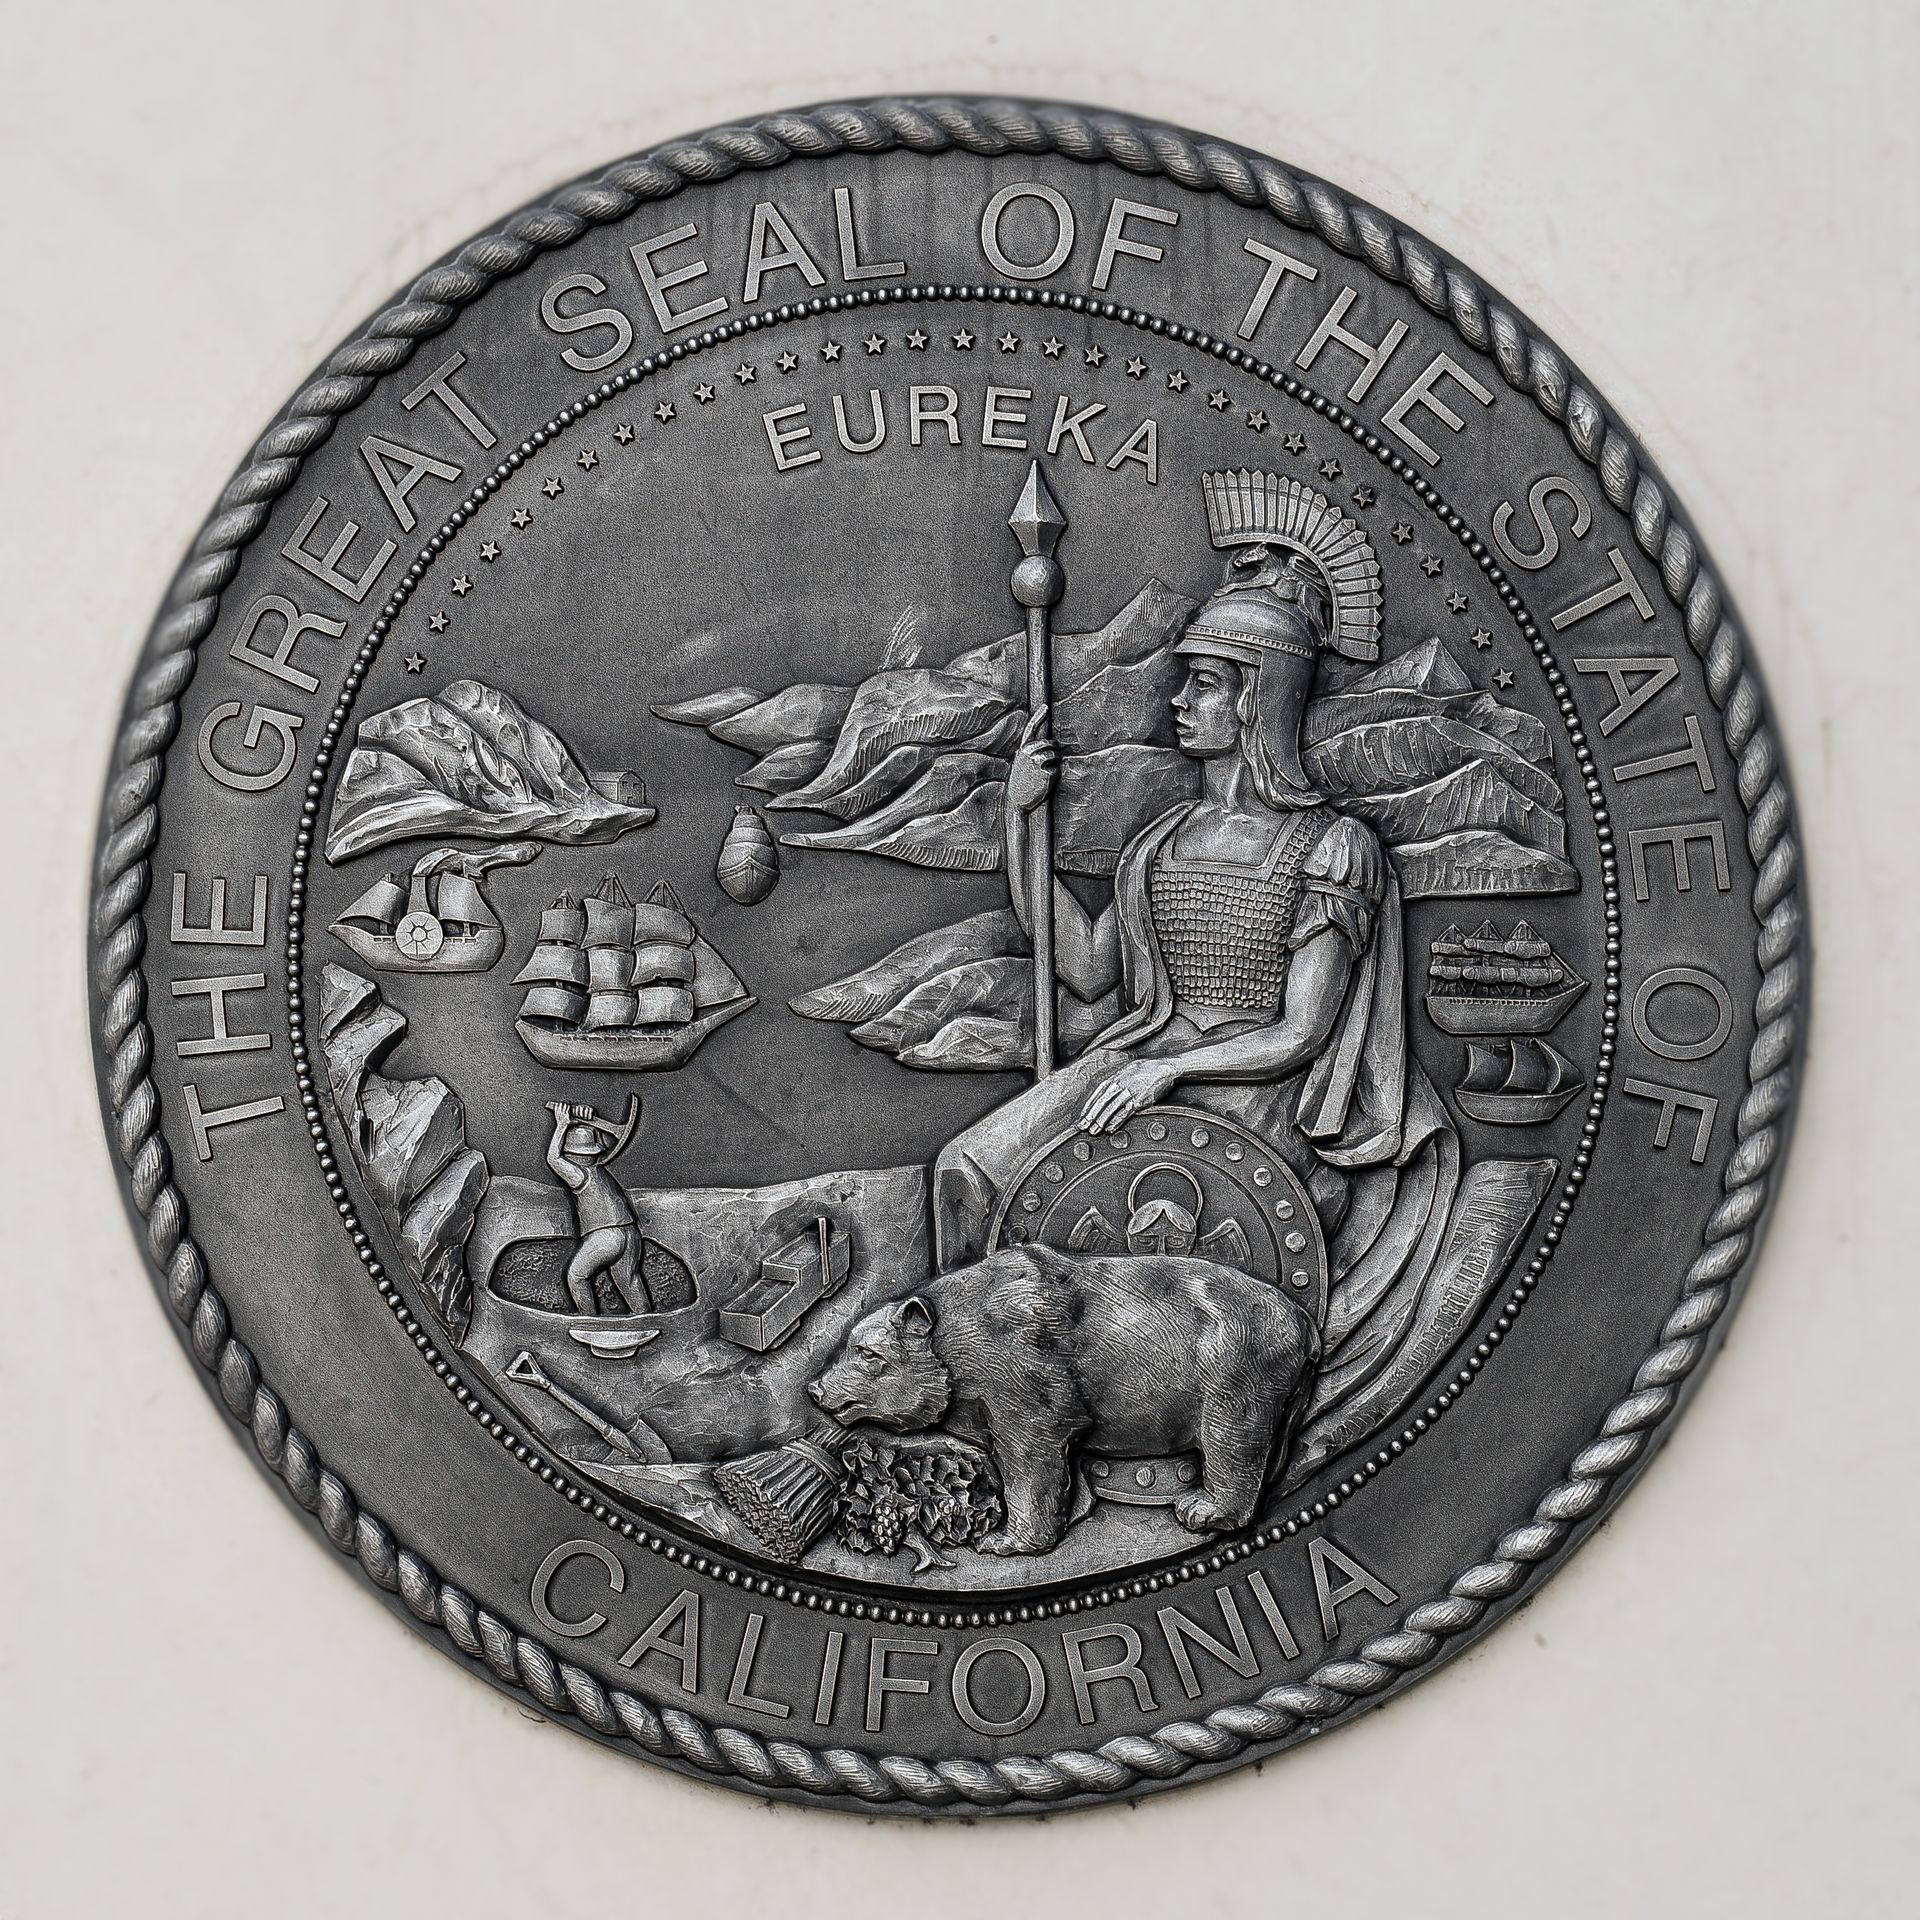 Kassel And Kassel criminal defense San Bernardino, the great seal of the state of California eureka